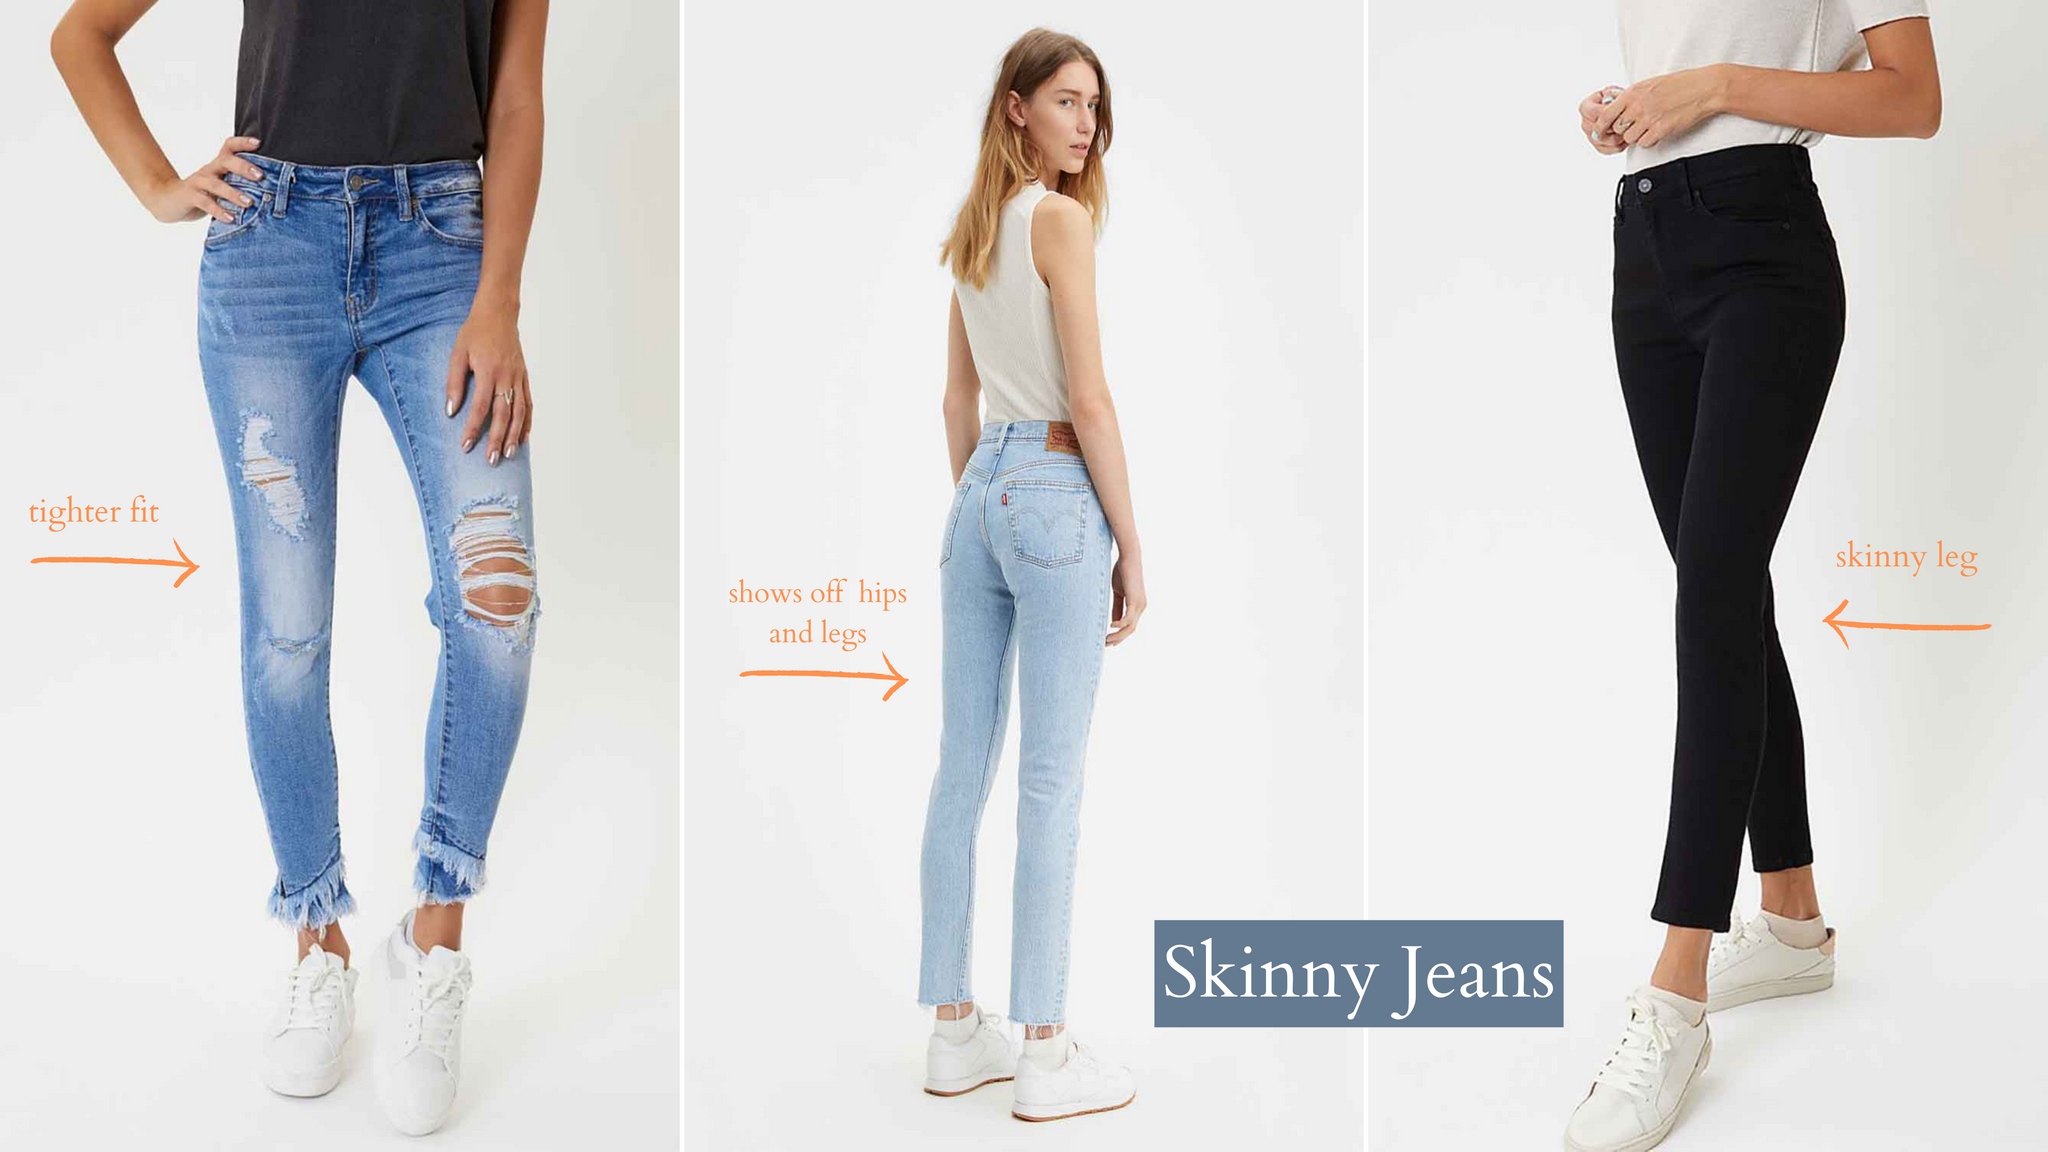 skinny jeans vs leggings